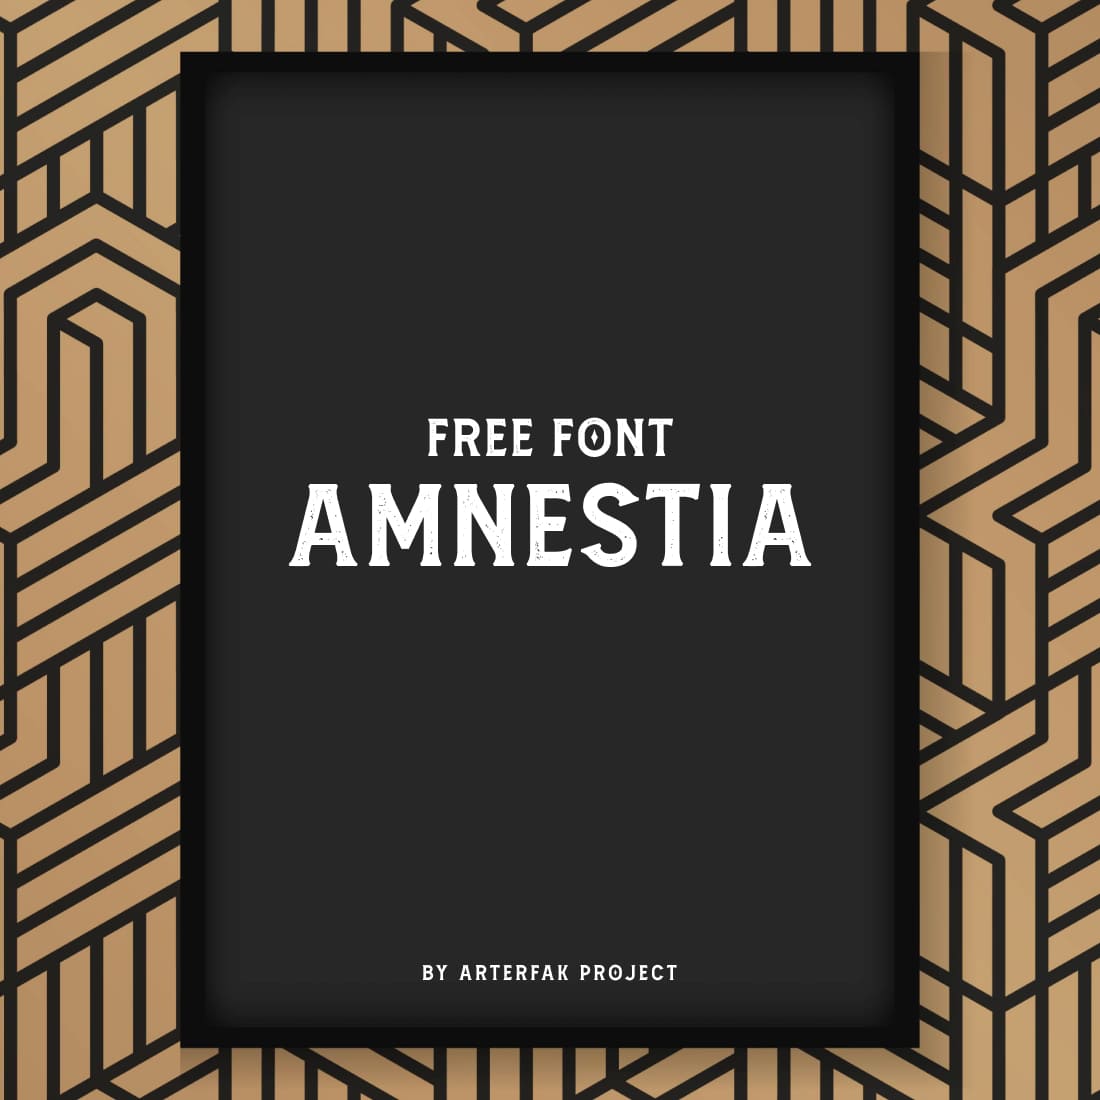 Free Amnestia Distressed Font Main Cover by MasterBundles.